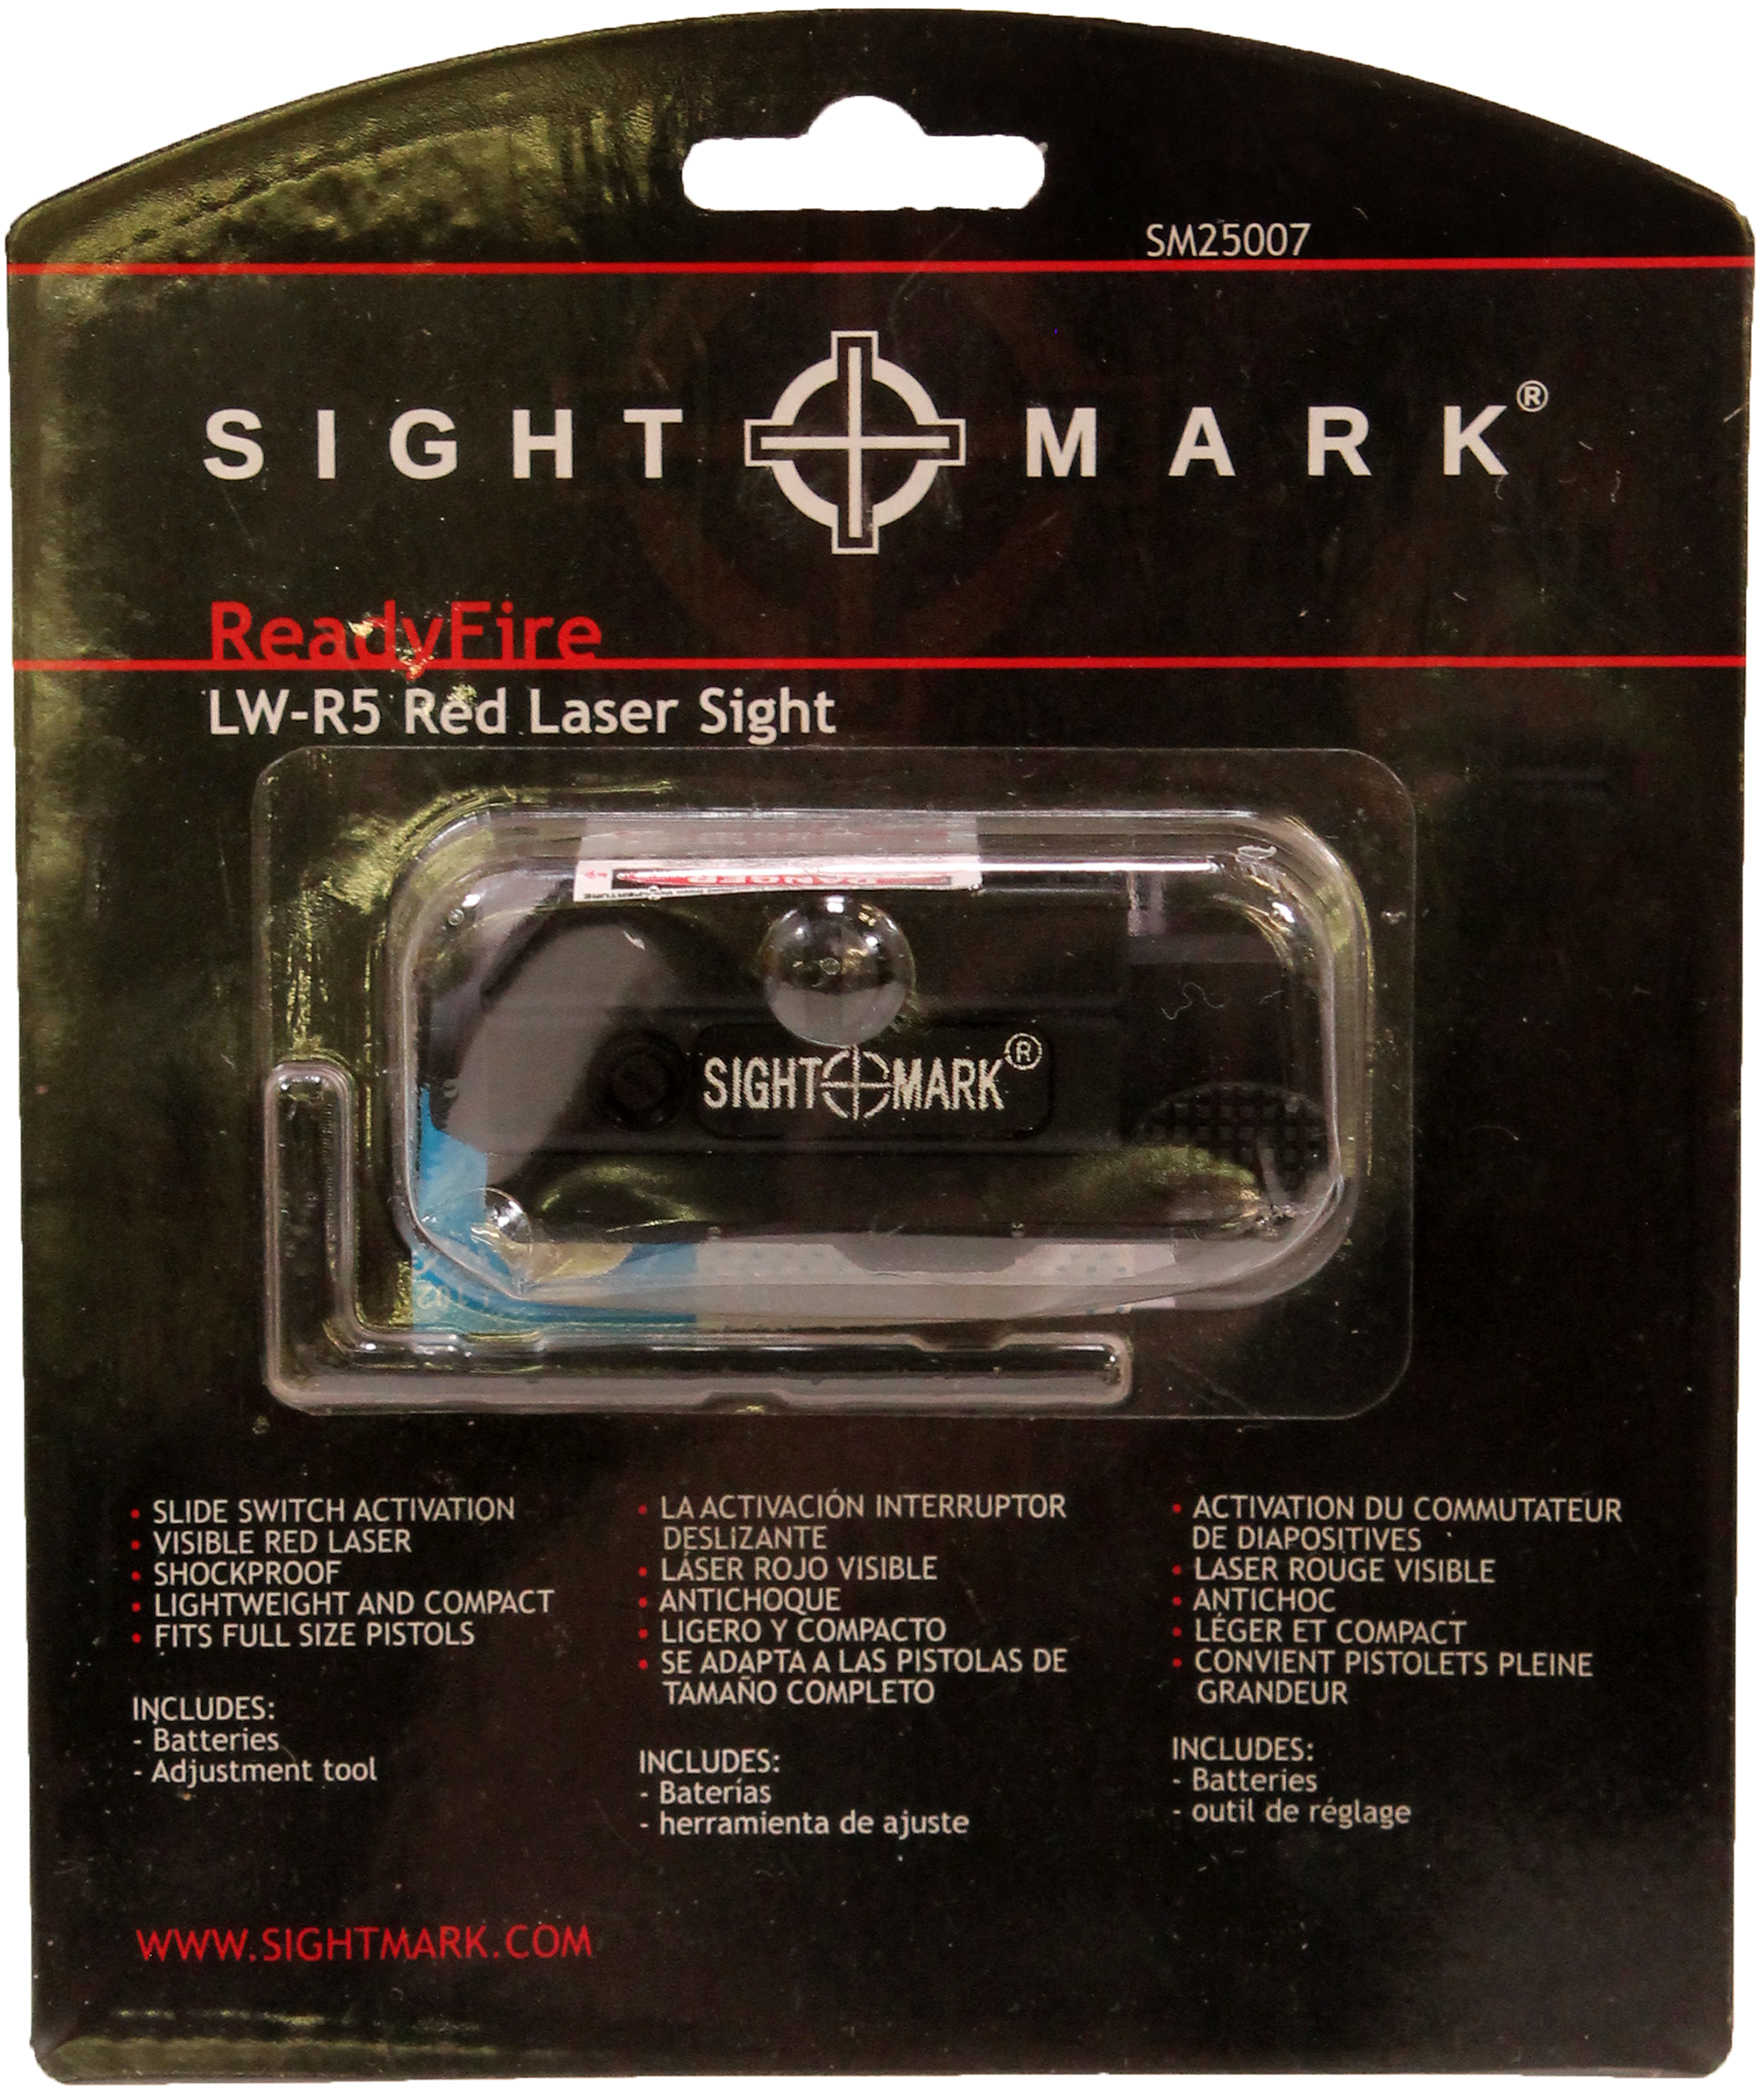 Sightmark ReadyFire LW-R5 Red Laser Md: SM25007